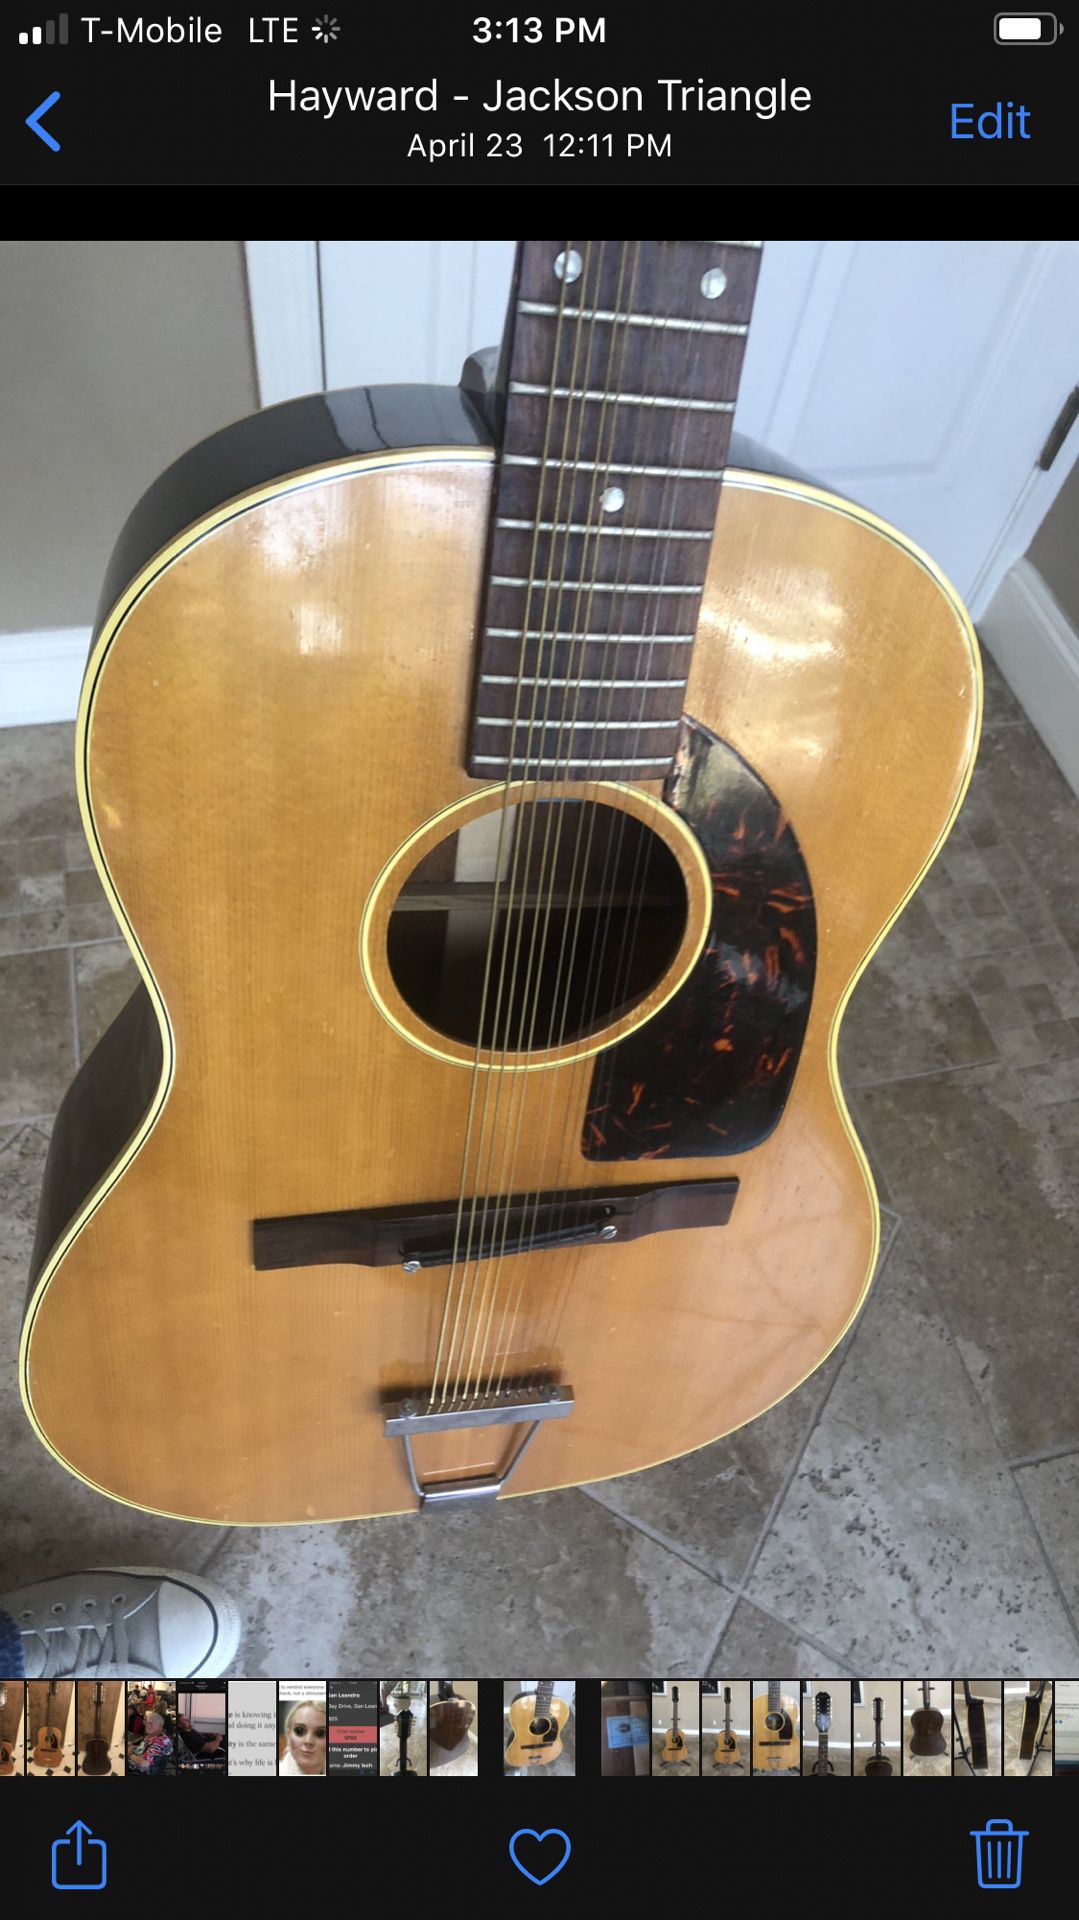 1964 Epiphone Serenader 12 string Acoustic Guitar.